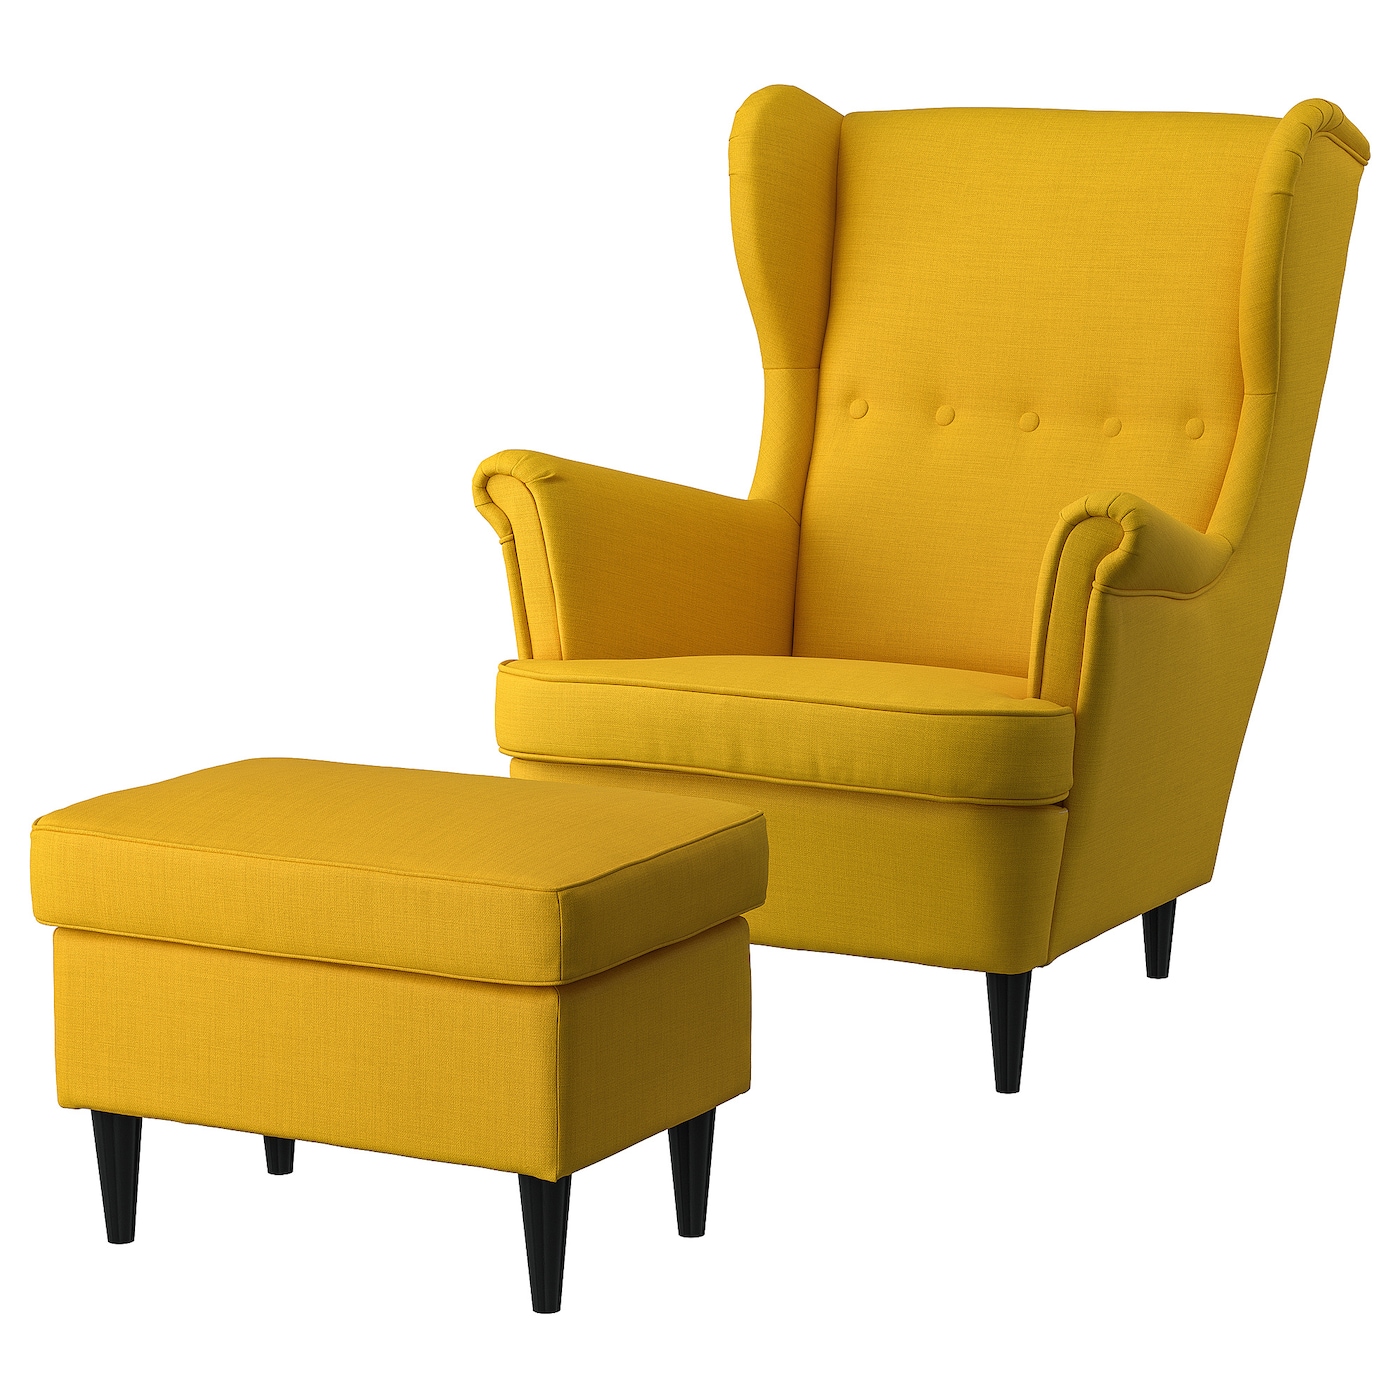 СТРАНДМОН Кресло и подставка для ног, Скифтебо желтый STRANDMON IKEA подставка для ног amarobaby first stage желтый